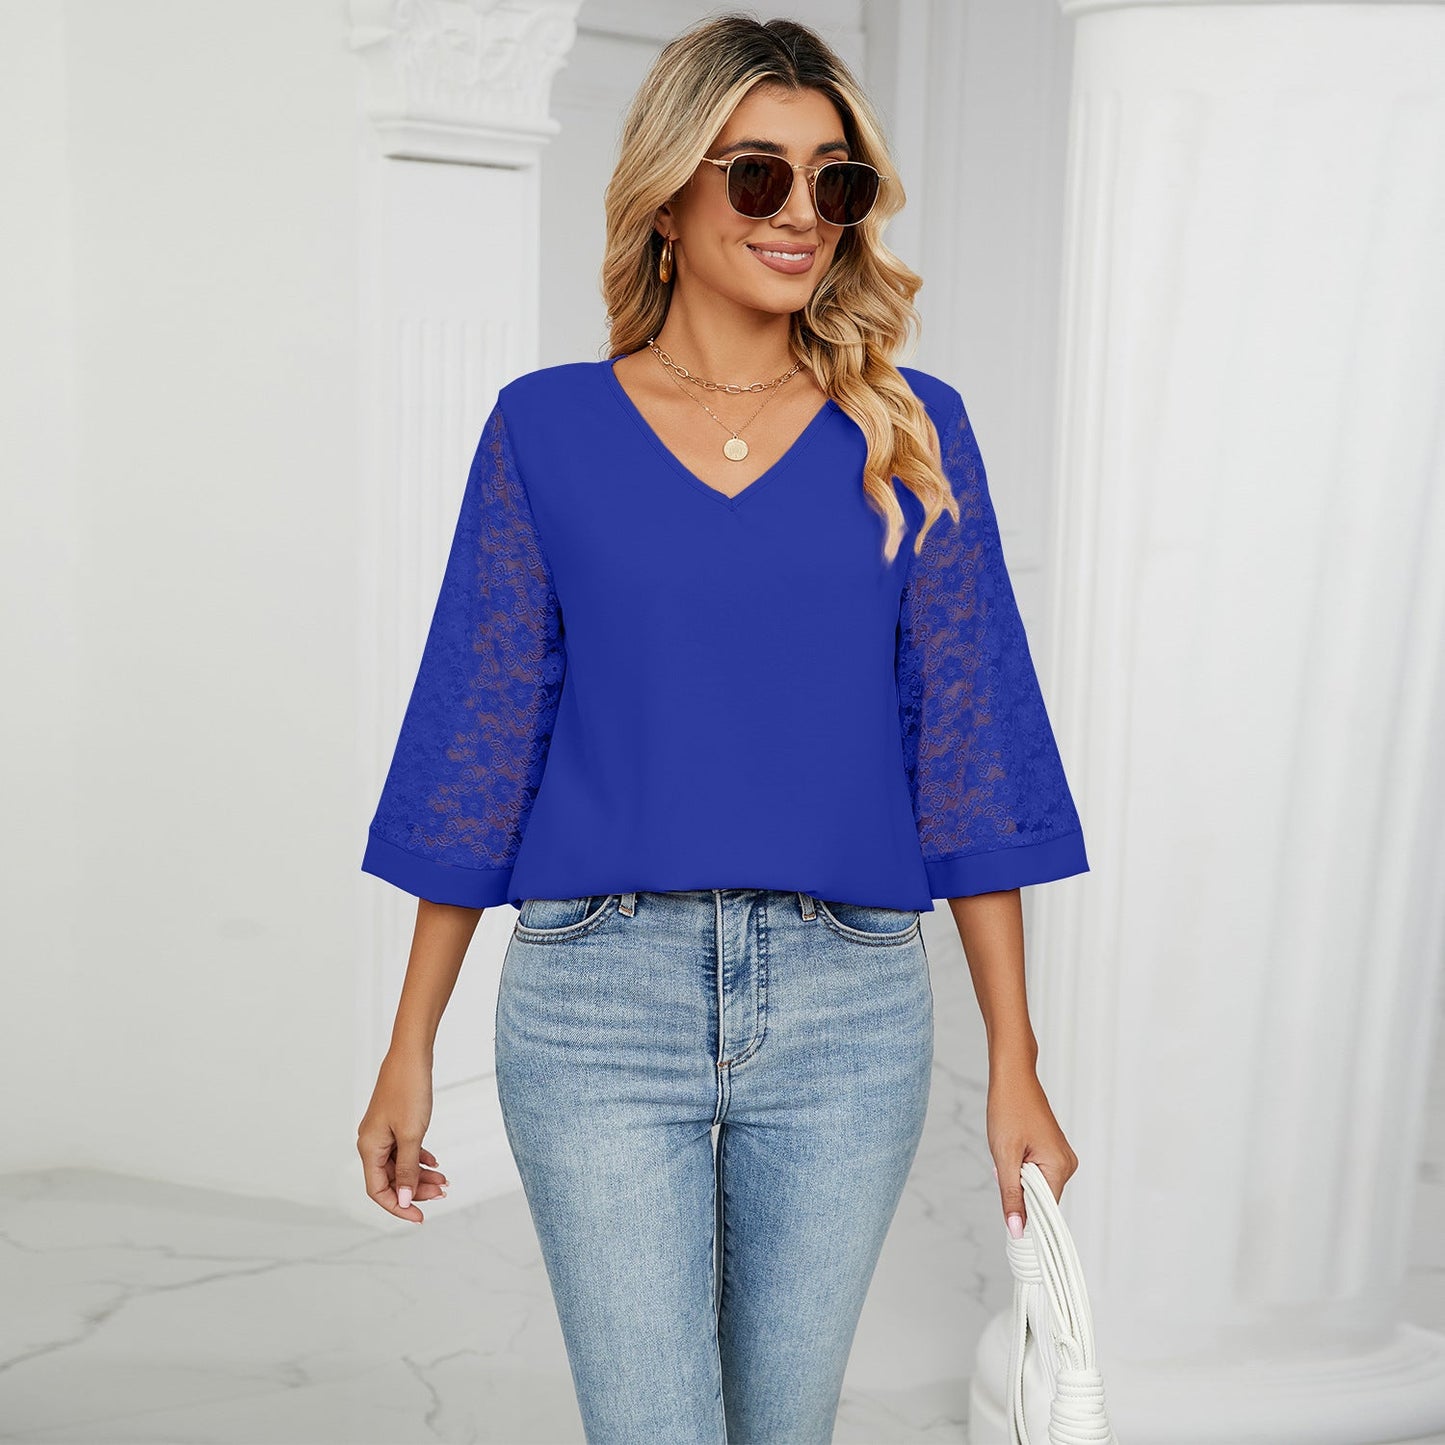 Fashion Summer Chiffon 3/4 Sleeves Women Blouses-Shirts & Tops-Blue-S-Free Shipping at meselling99